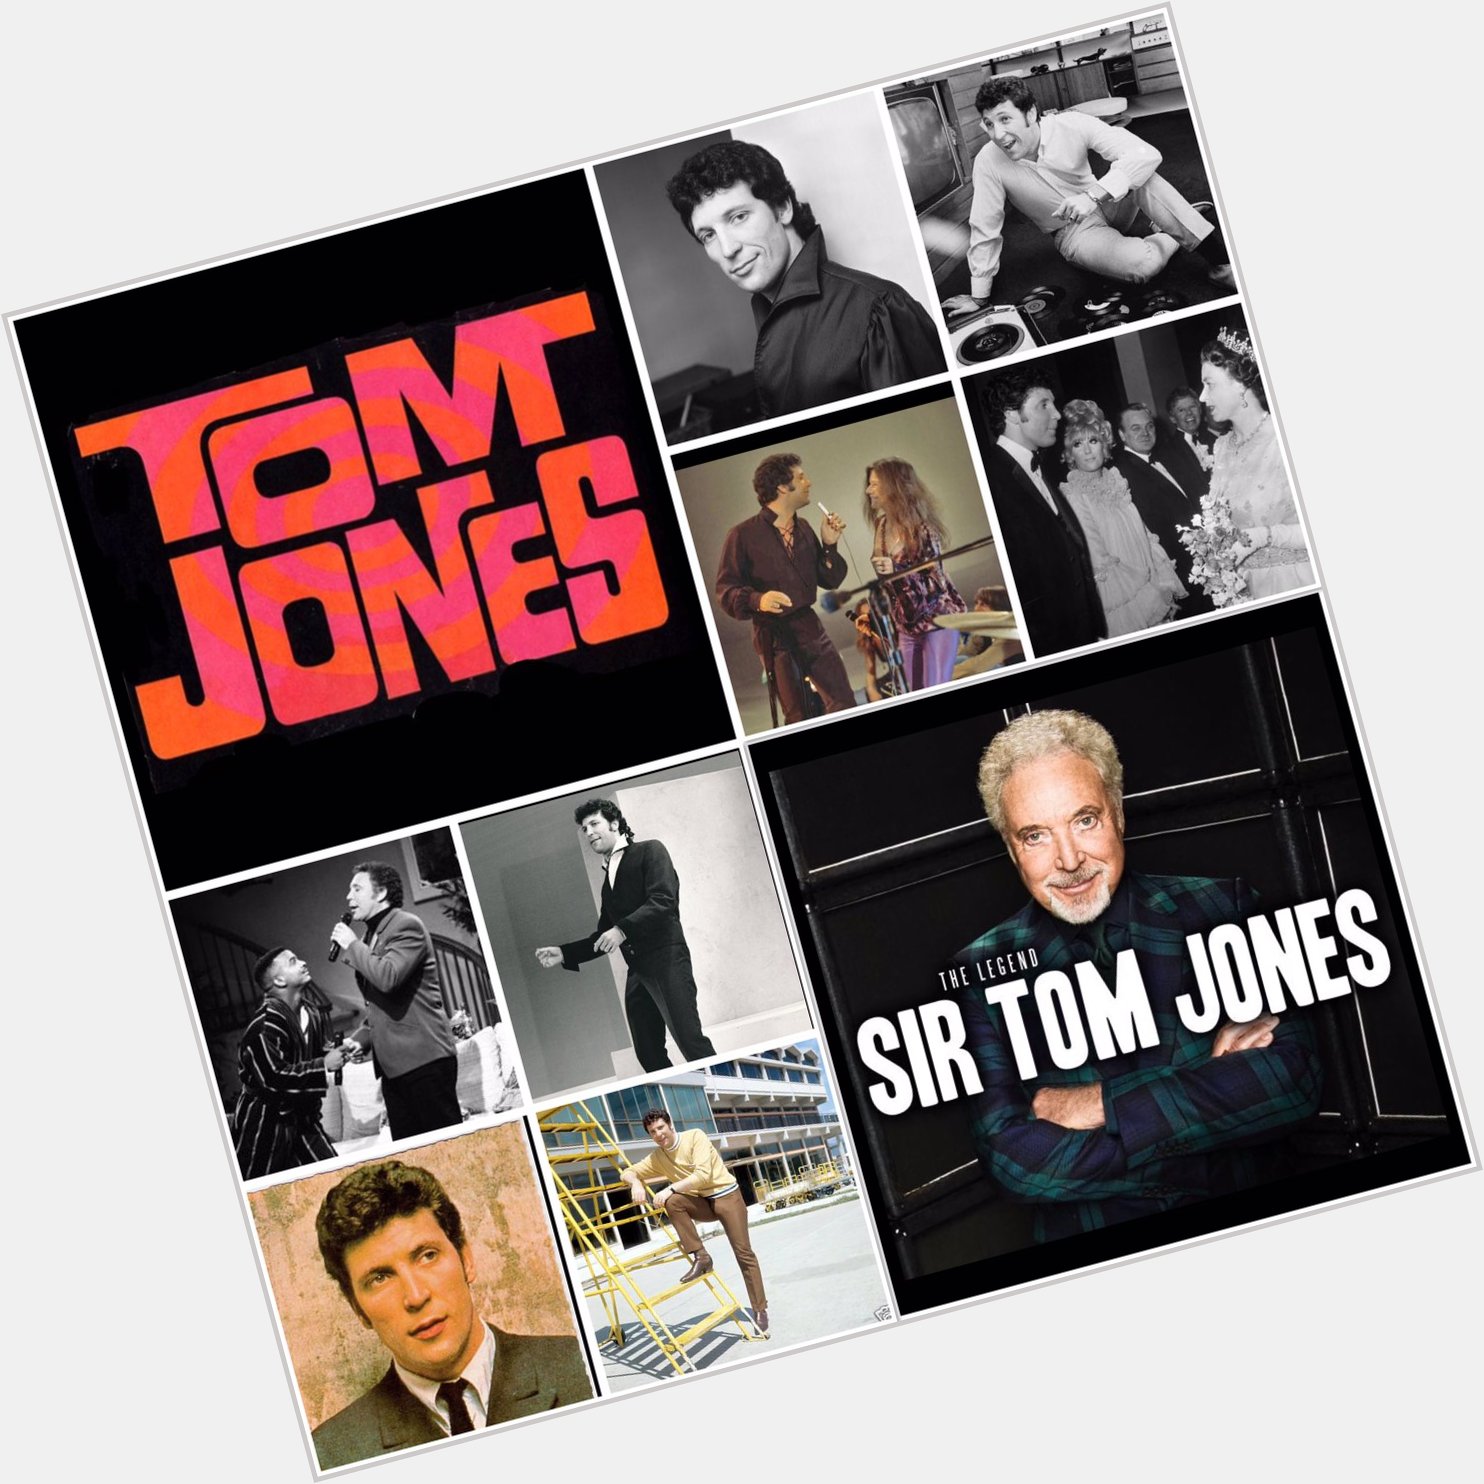 Today in History
June 7th
HAPPY BIRTHDAY
1940 Tom Jones, Singer, turns 77. 